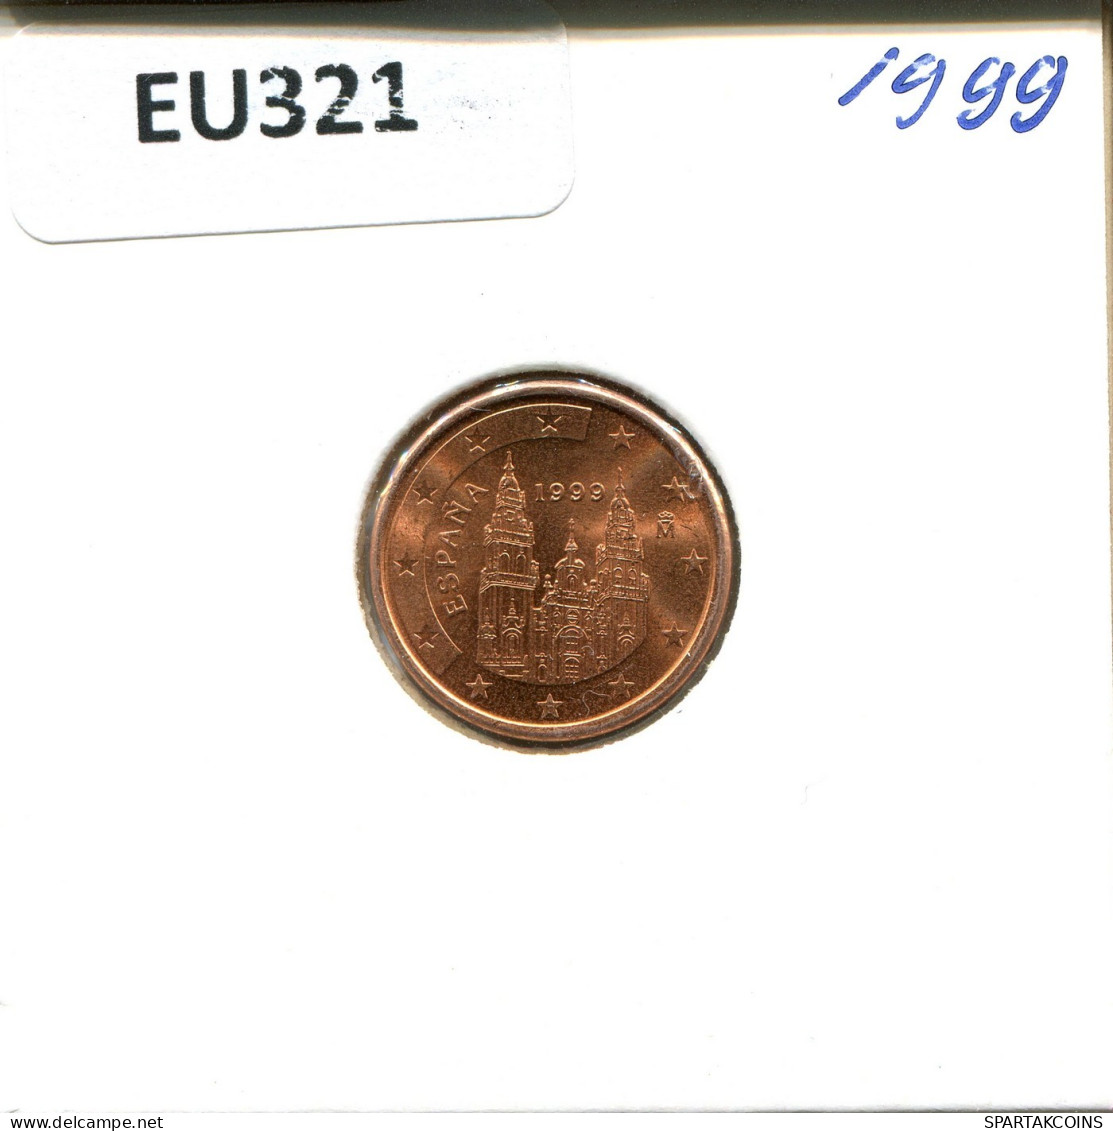 1 EURO CENT 1999 SPANIEN SPAIN Münze #EU321.D.A - Spagna